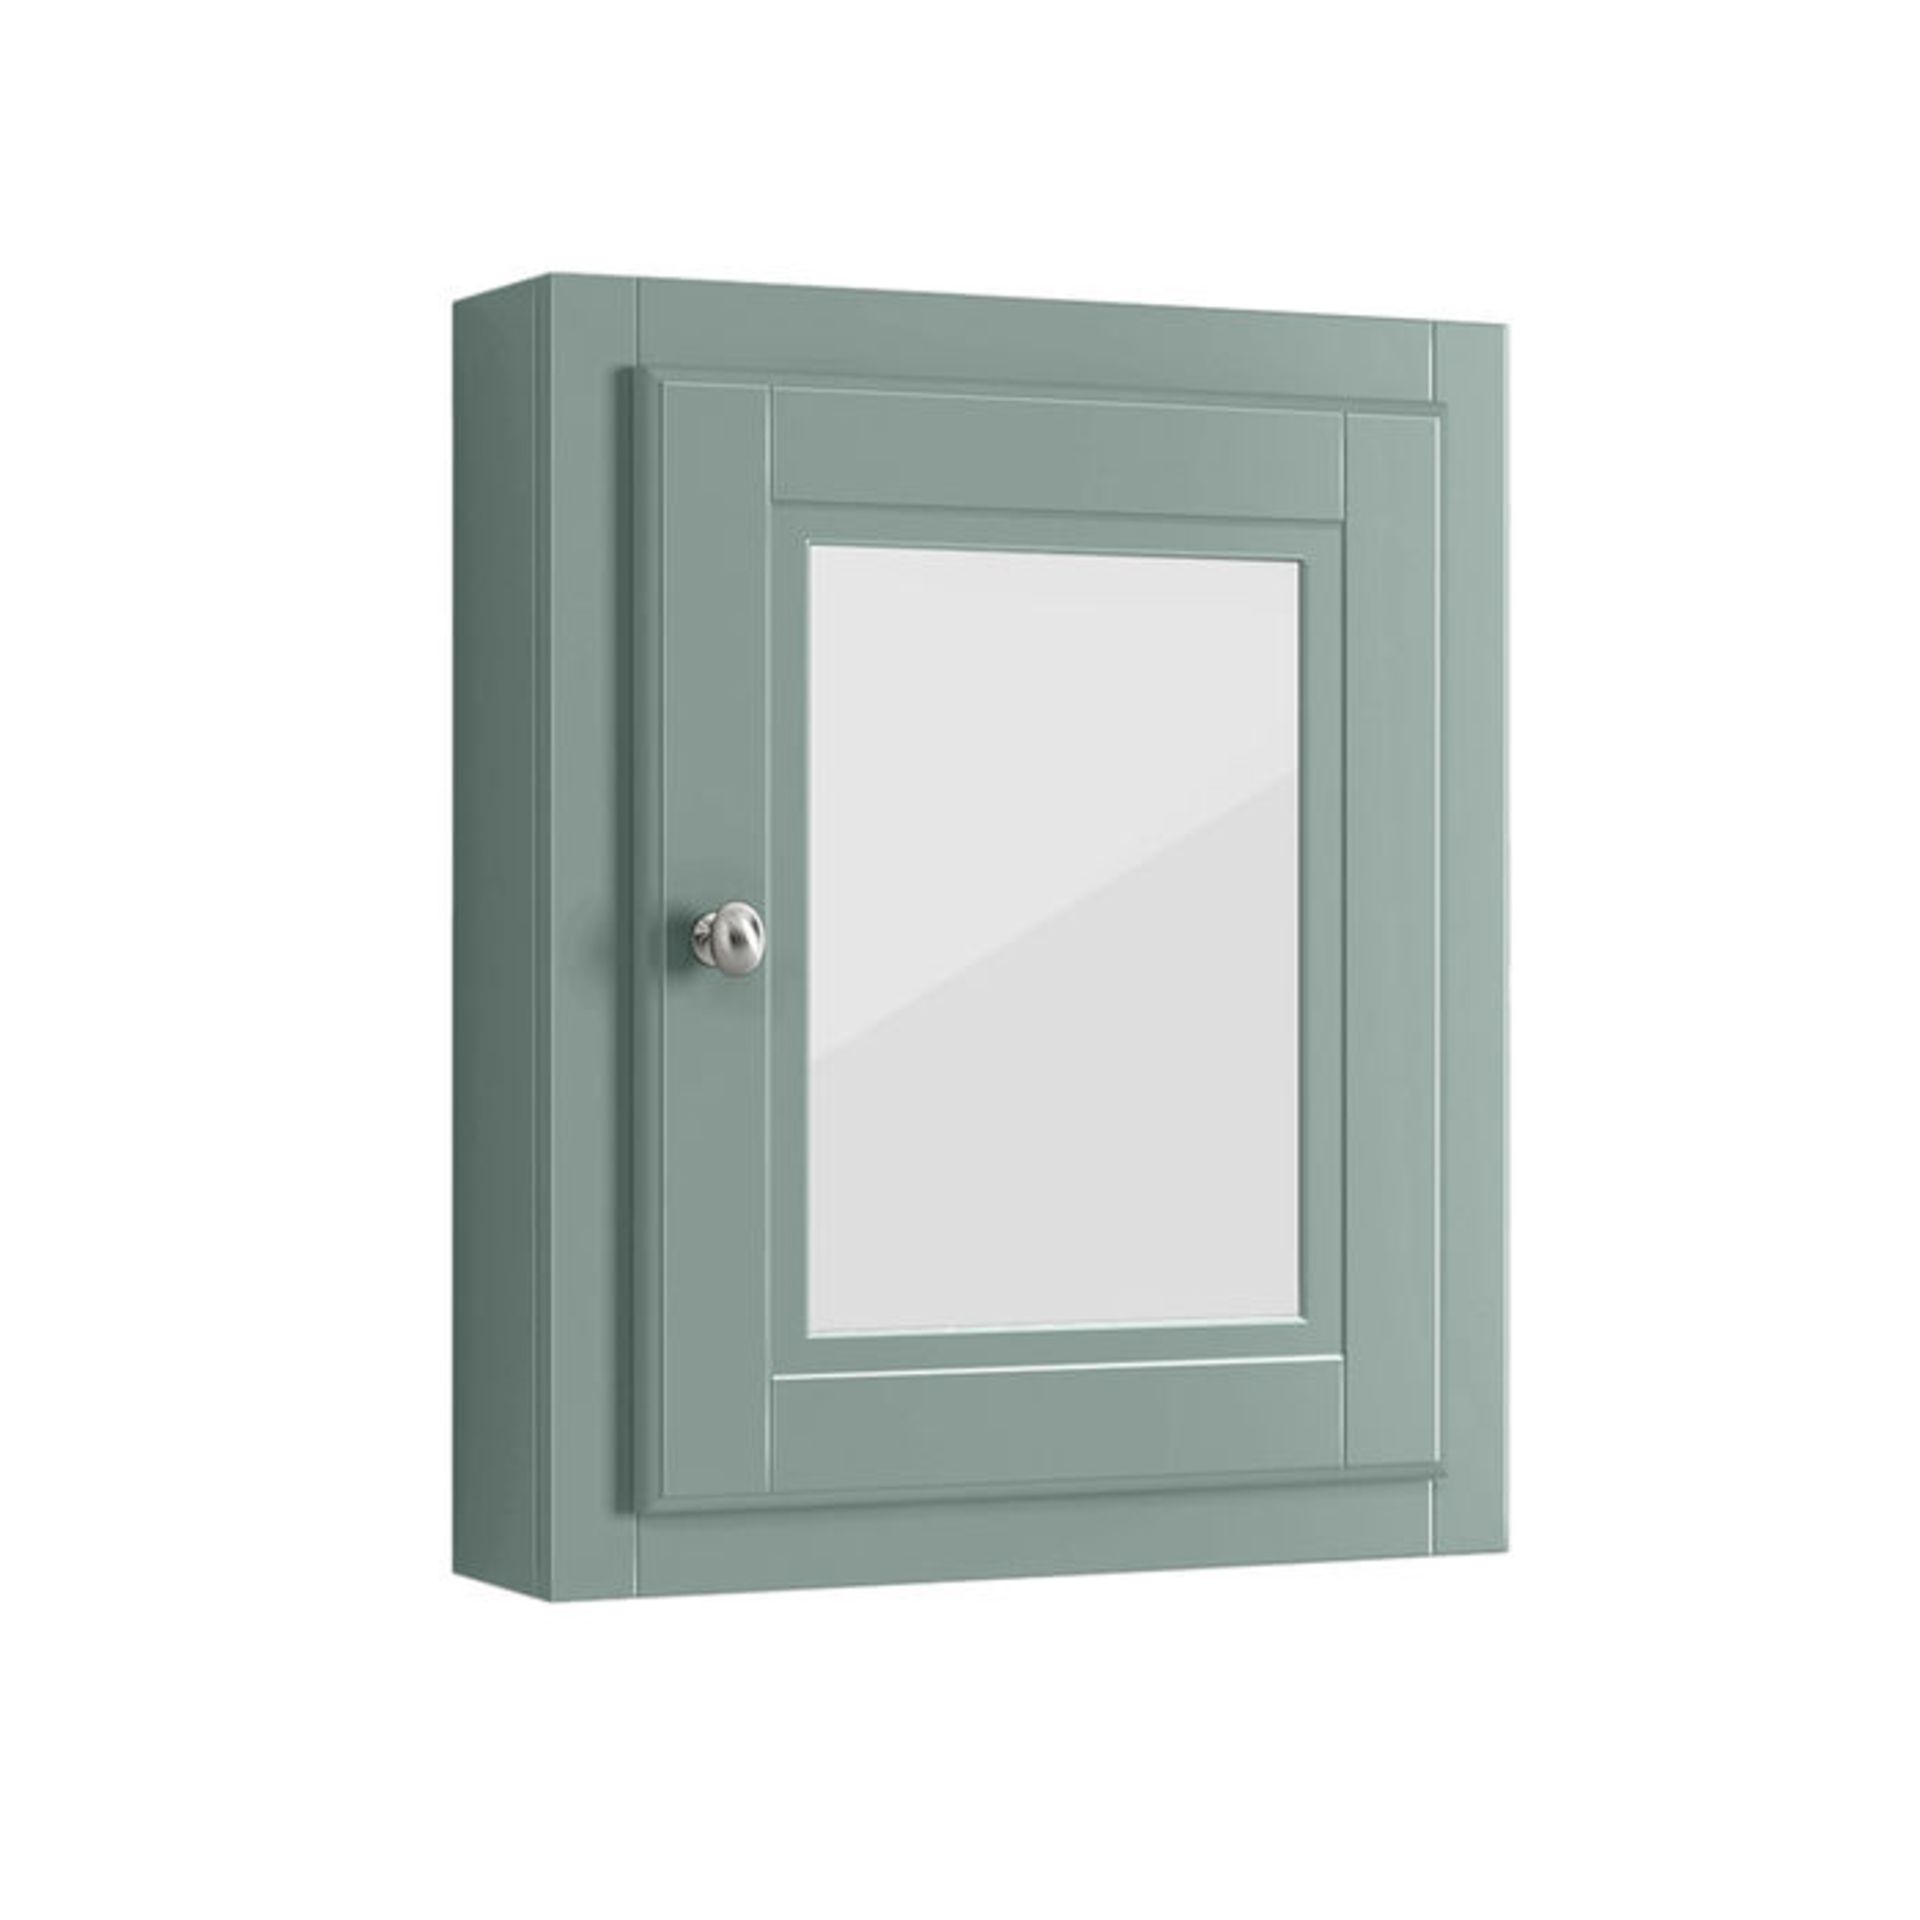 (XX39) Cambridge Single Door Mirror Cabinet - Marine Mist. RRP £199.99. Traditional aesthetic ... - Image 4 of 5